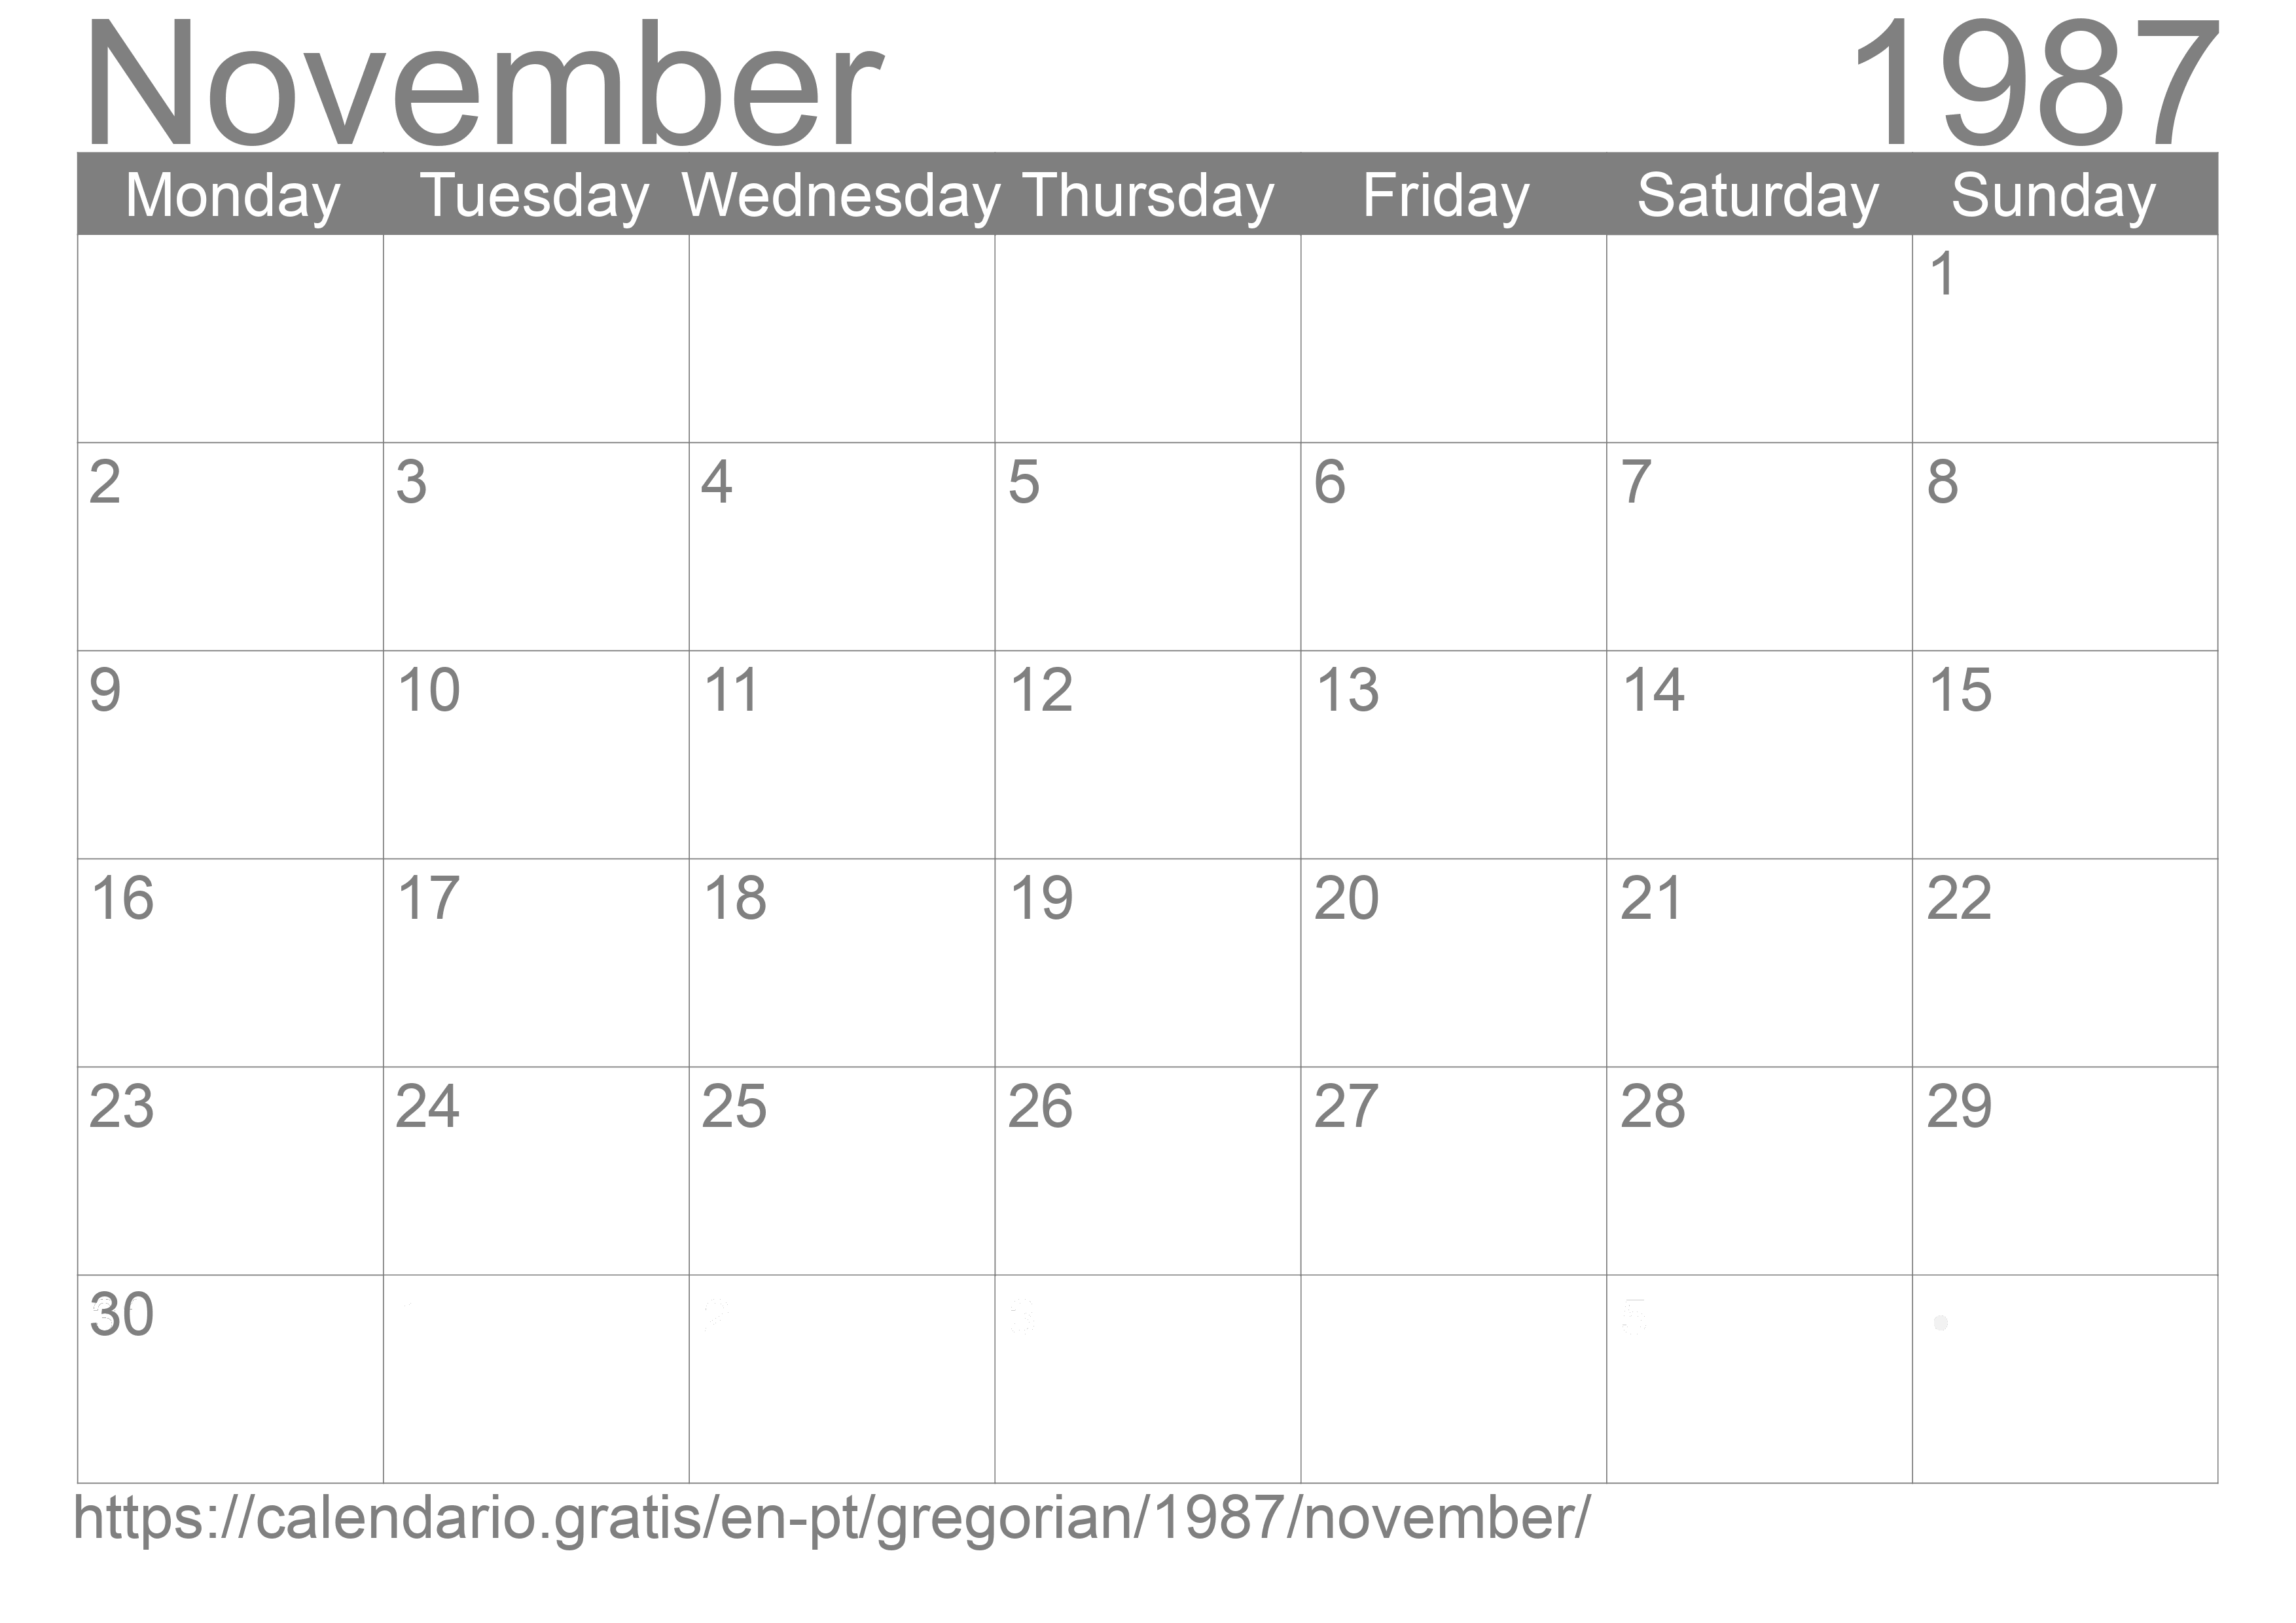 Calendar November 1987 to print